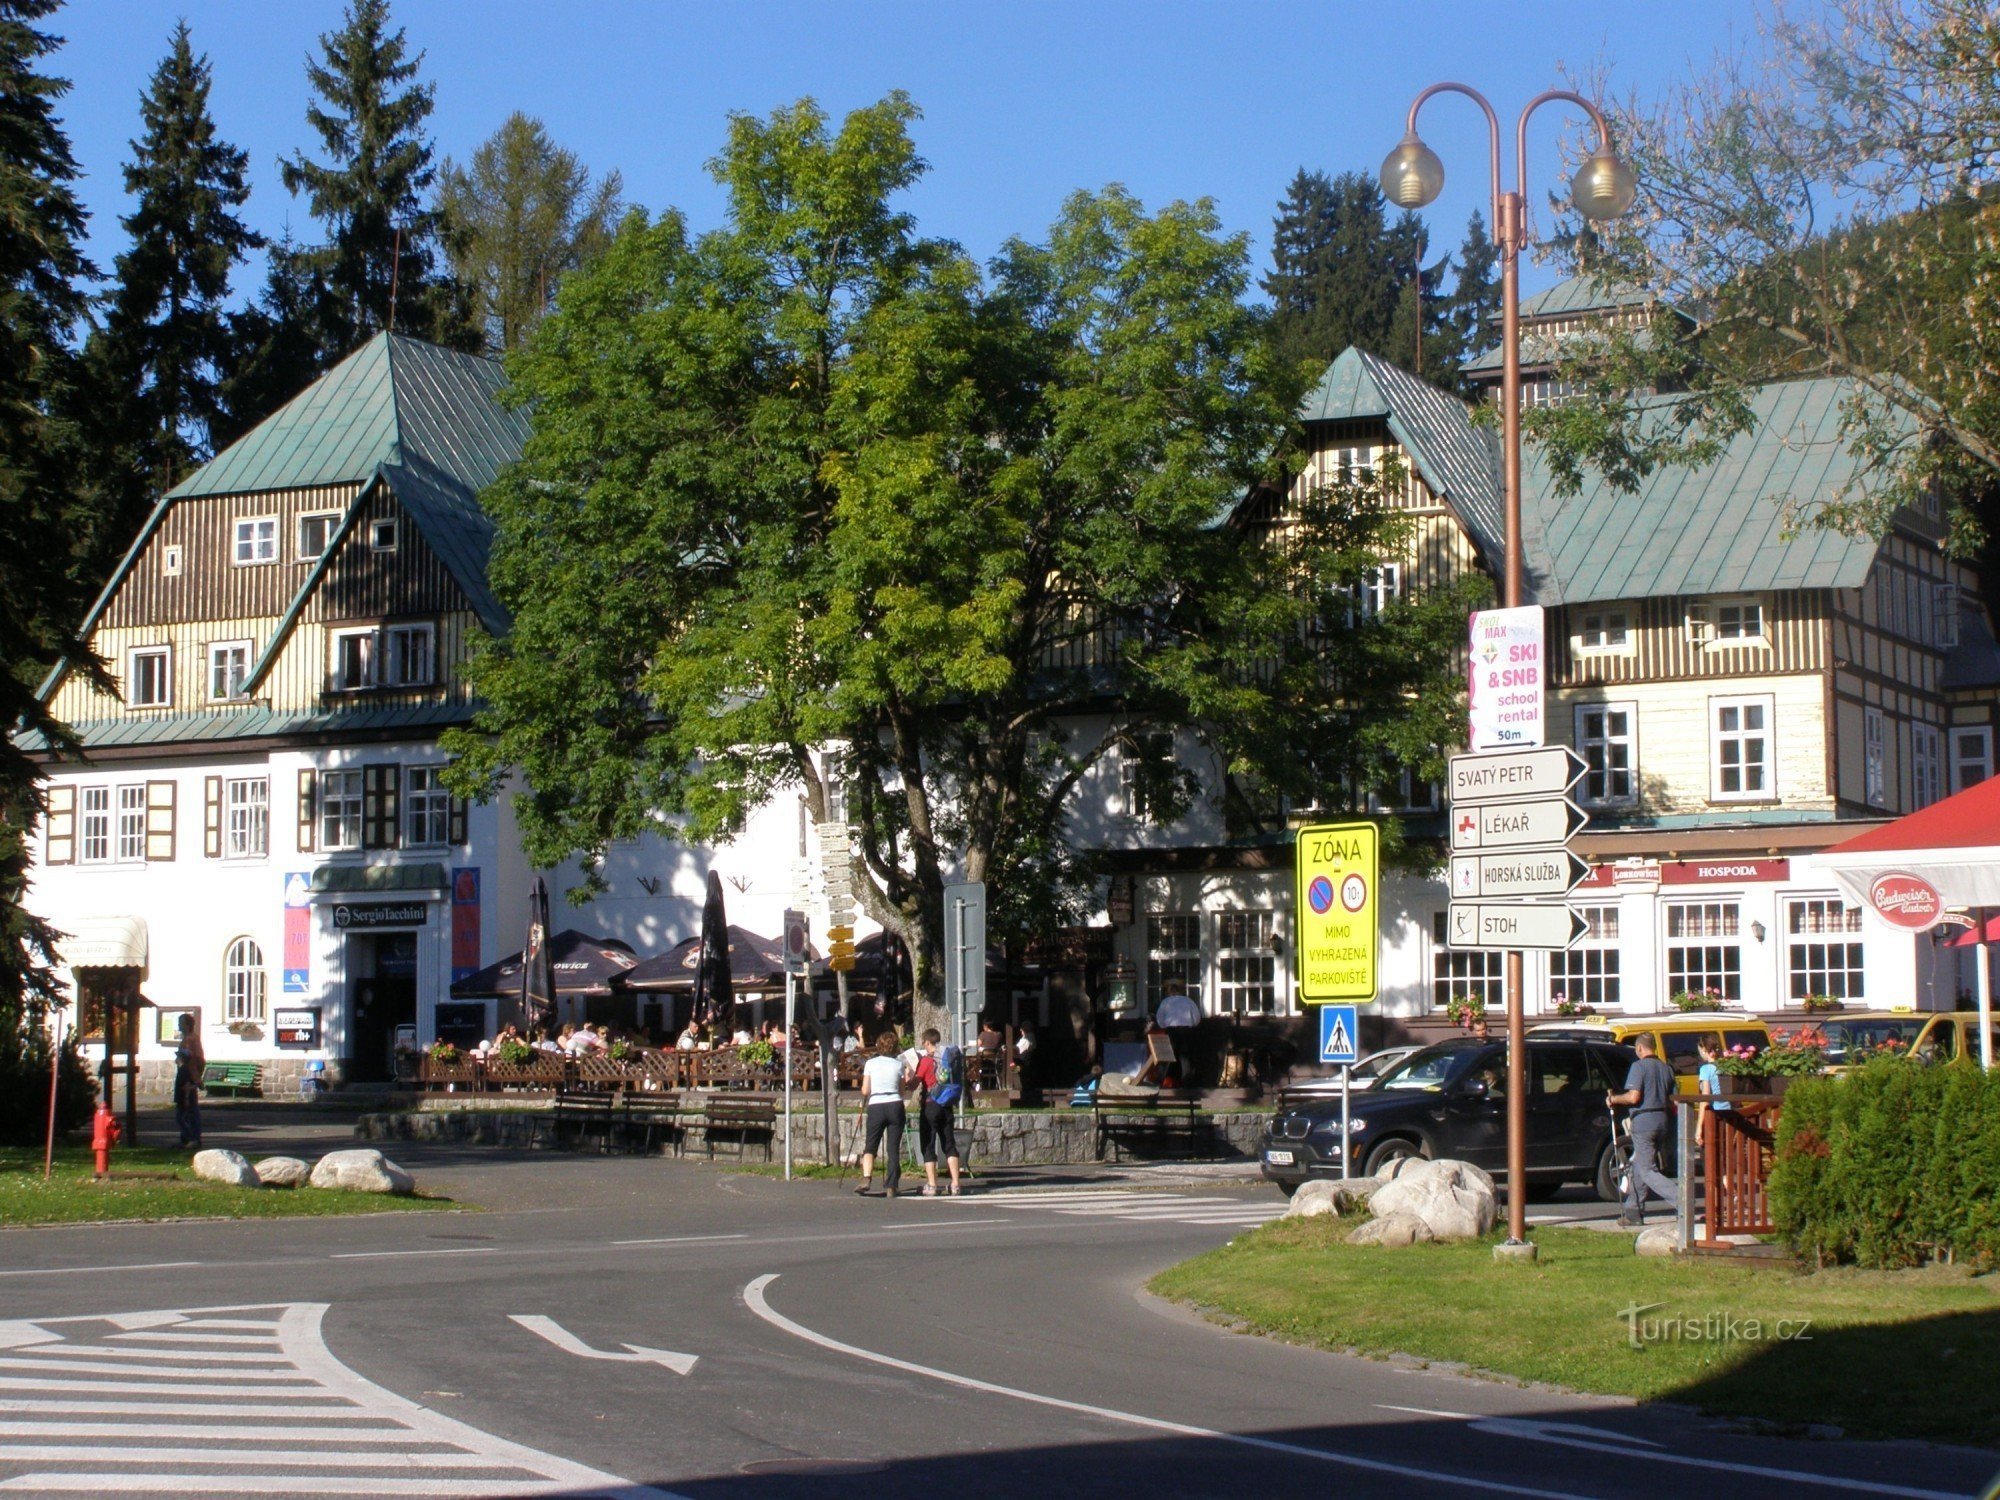 Špindlerův Mlýn - glavni turistični kažipot